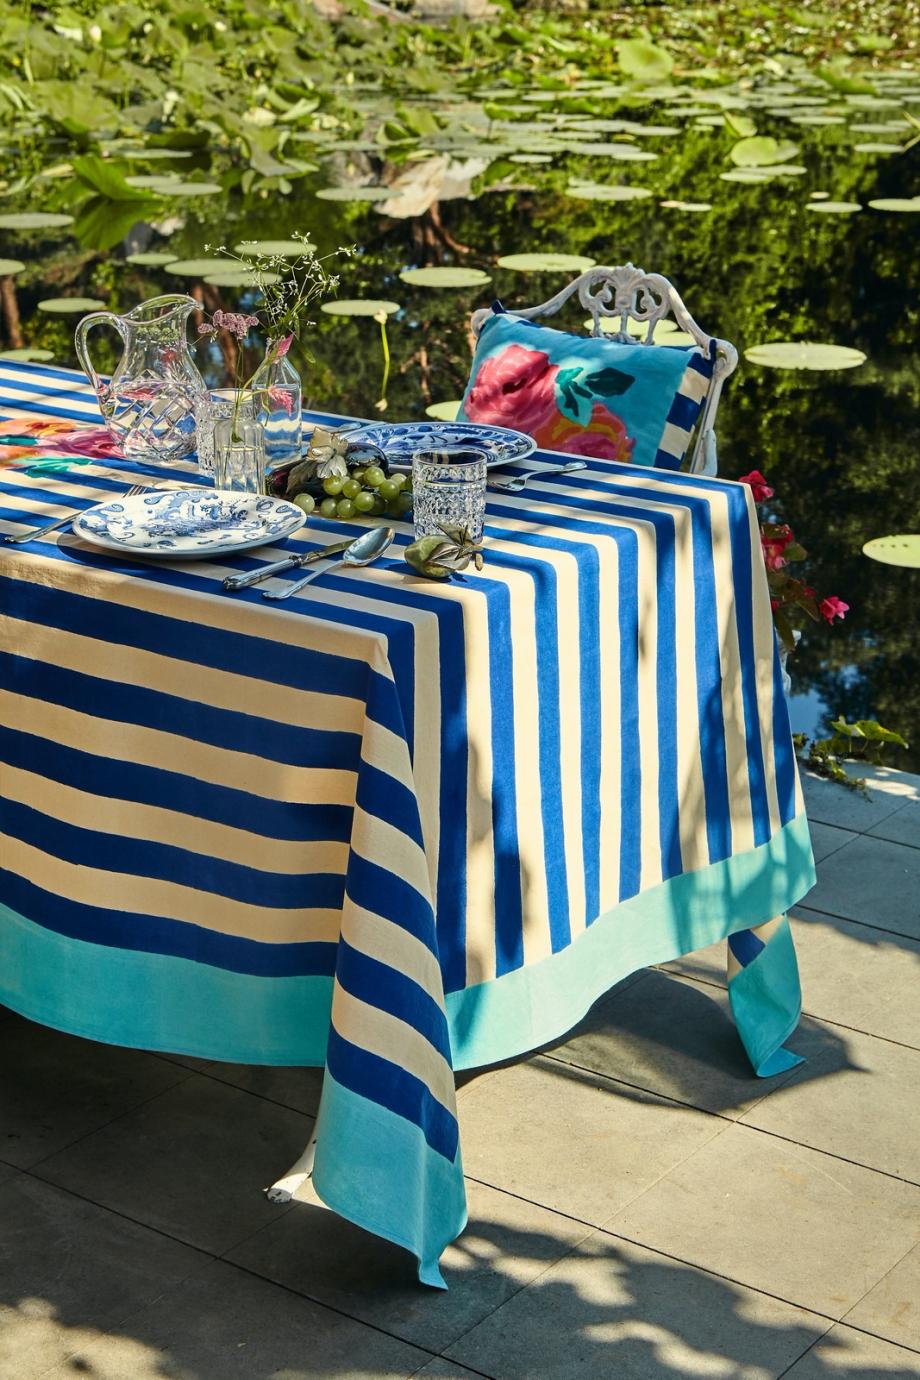 Nizam striped cotton table cloth 